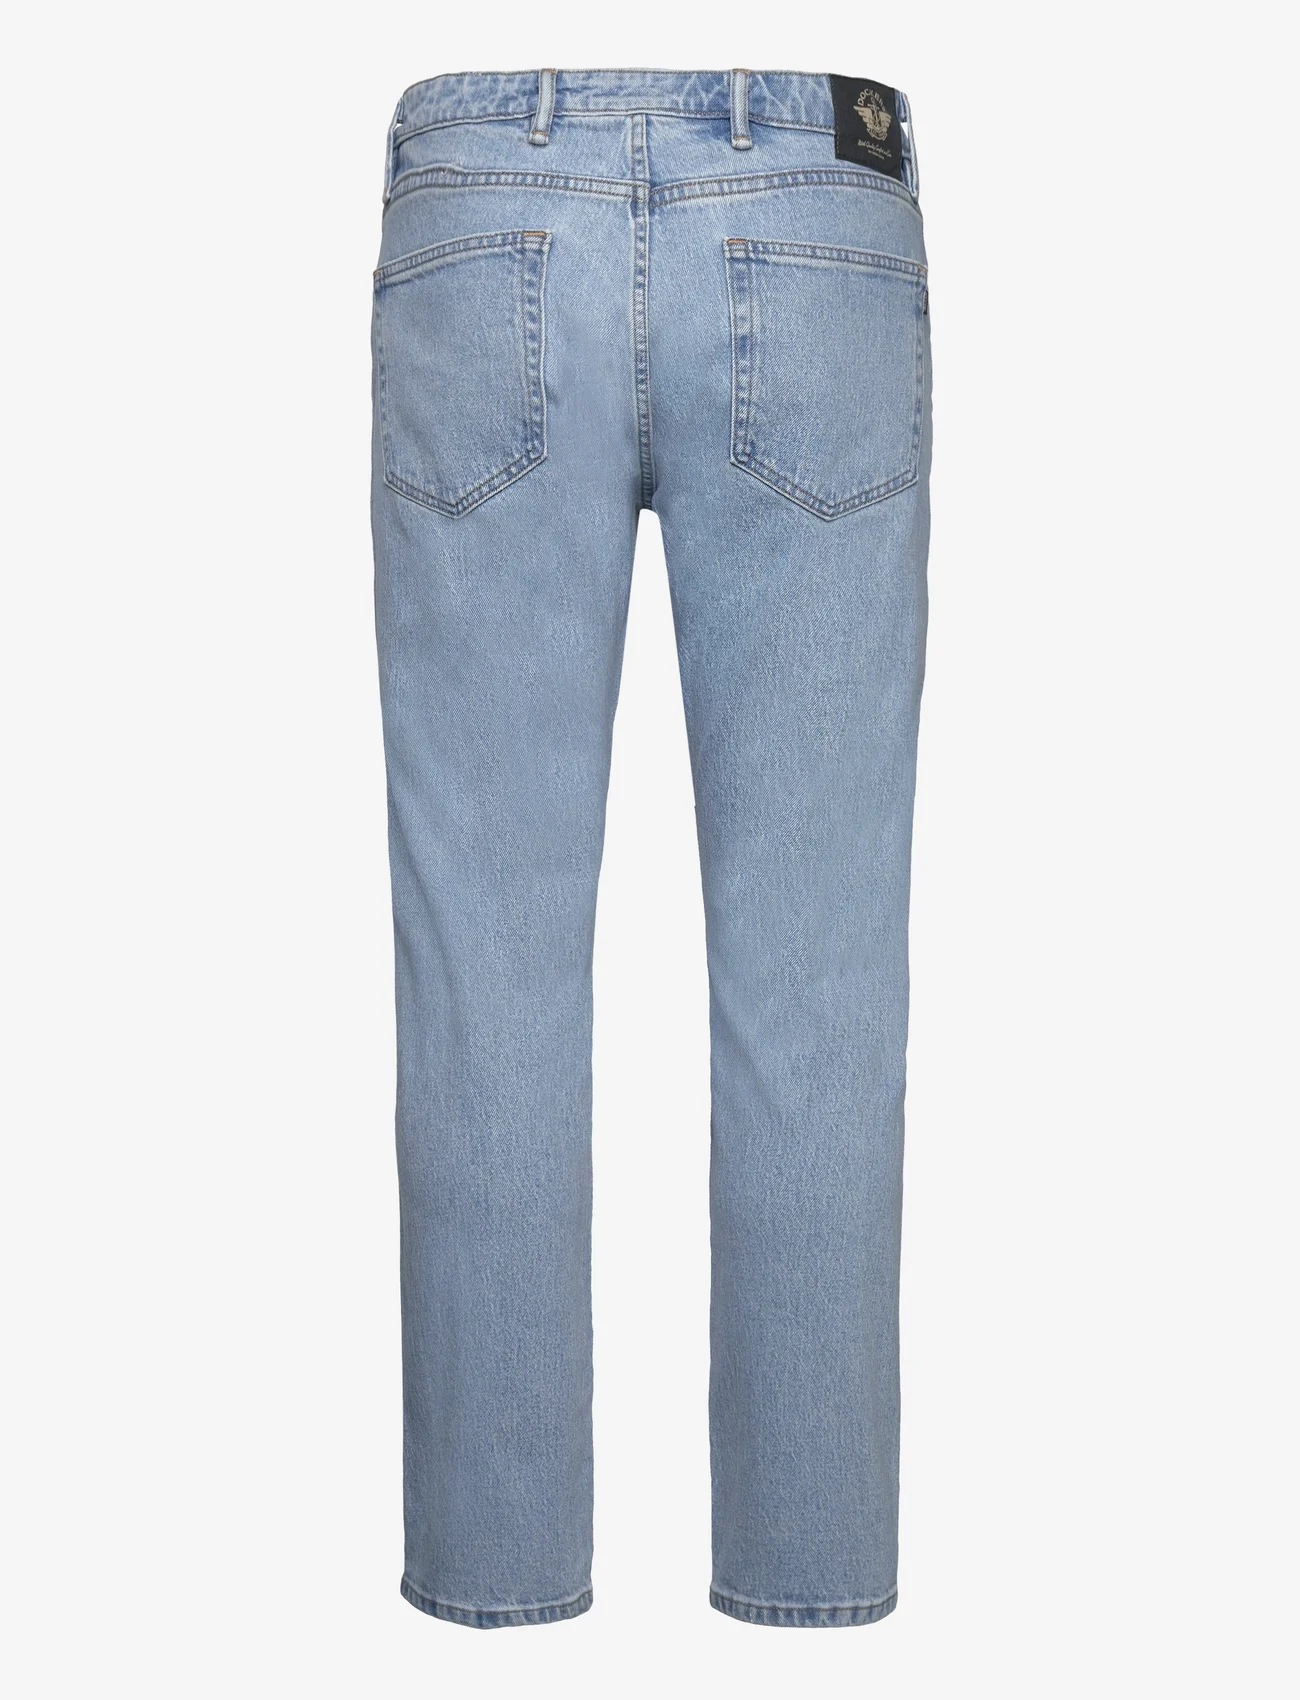 Dockers - T2 ORIG JEAN - slim fit jeans - light indigo - flat finis - 1